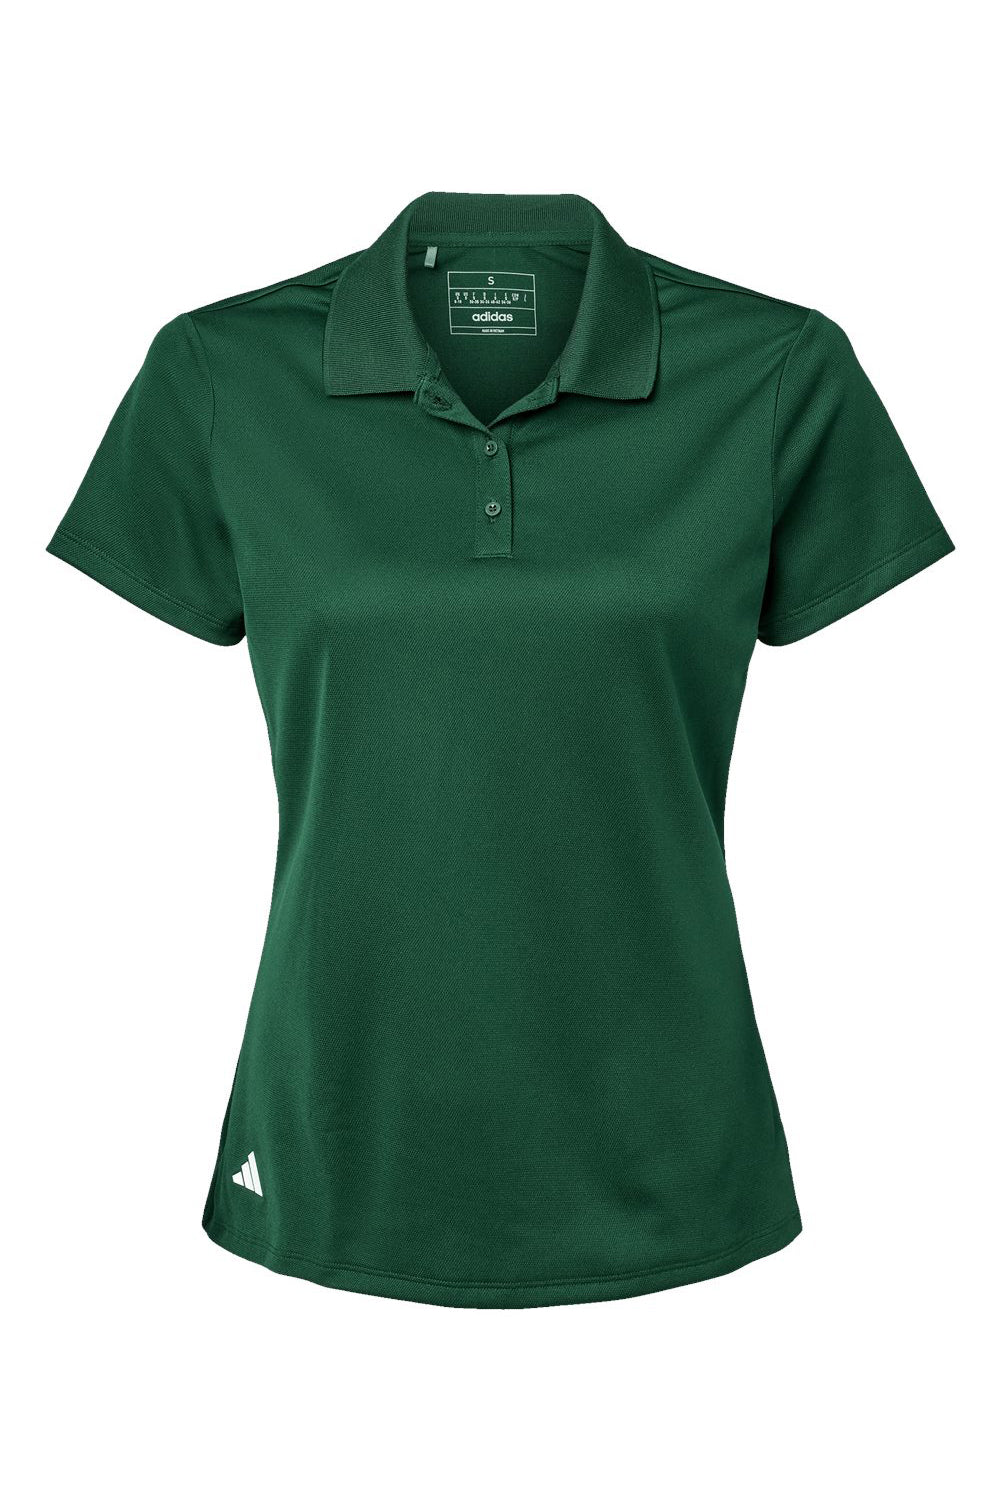 Adidas A431 Womens Basic Short Sleeve Polo Shirt Collegiate Green Flat Front